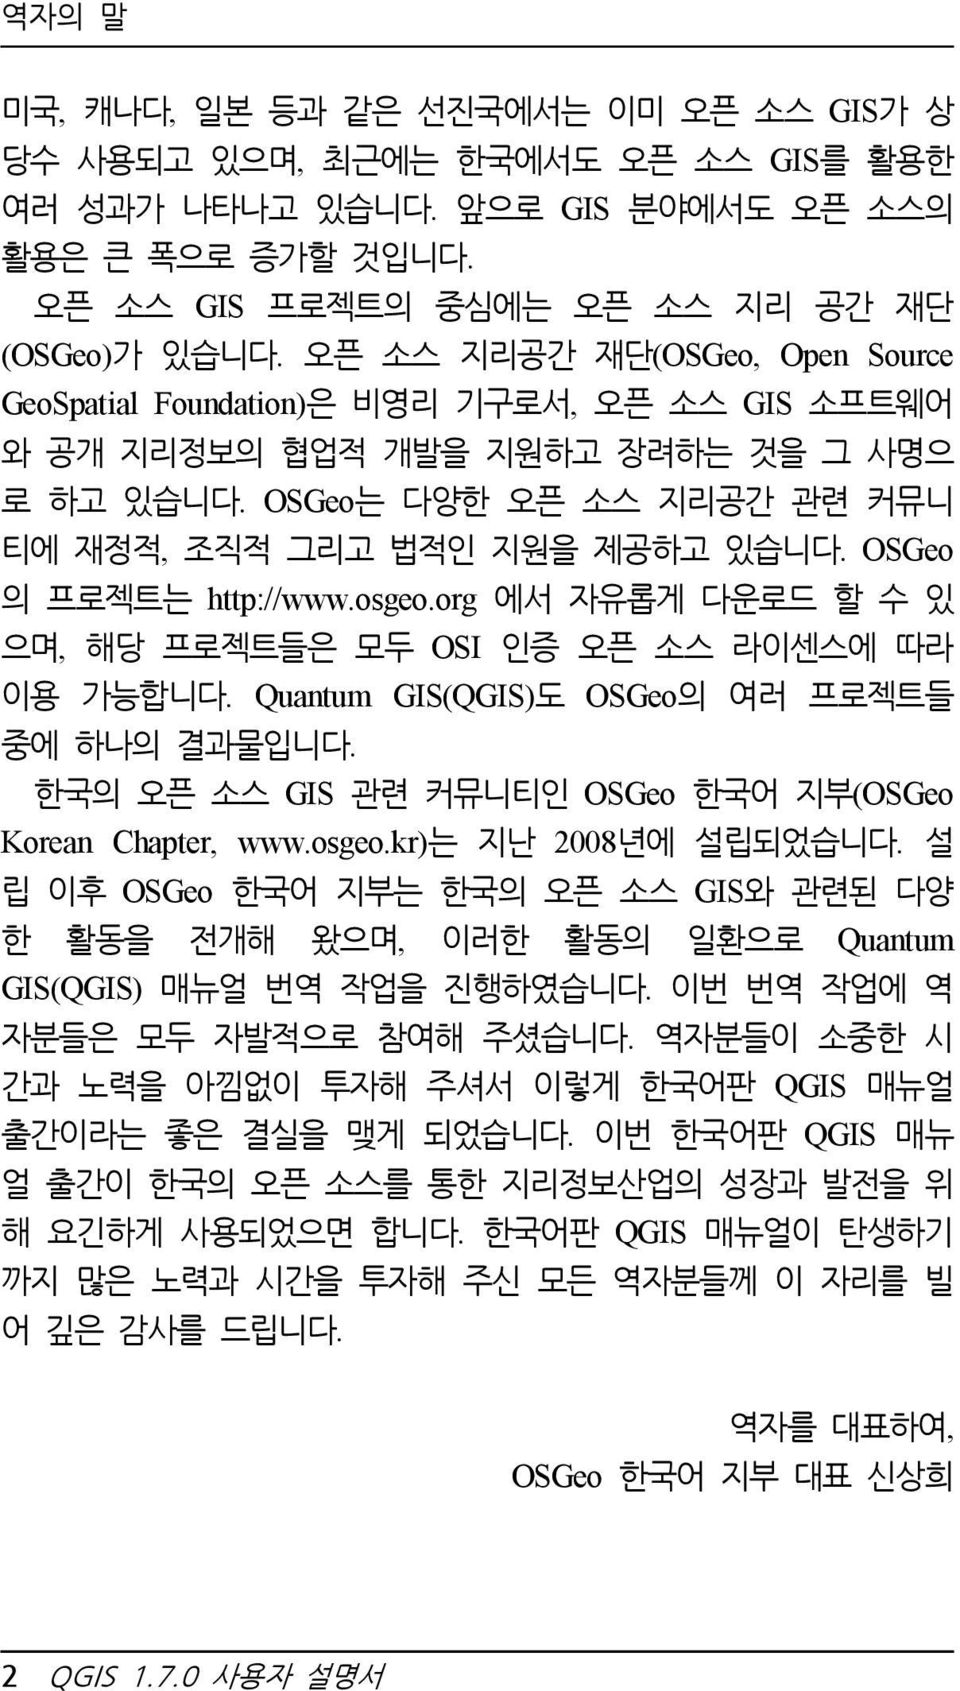 OSGeo 의 프로젝트는 http://www.osgeo.org 에서 자유롭게 다운로드 할 수 있 으며, 해당 프로젝트들은 모두 OSI 인증 오픈 소스 라이센스에 따라 이용 가능합니다. Quantum GIS(QGIS) 도 OSGeo 의 여러 프로젝트들 중에 하나의 결과물입니다.